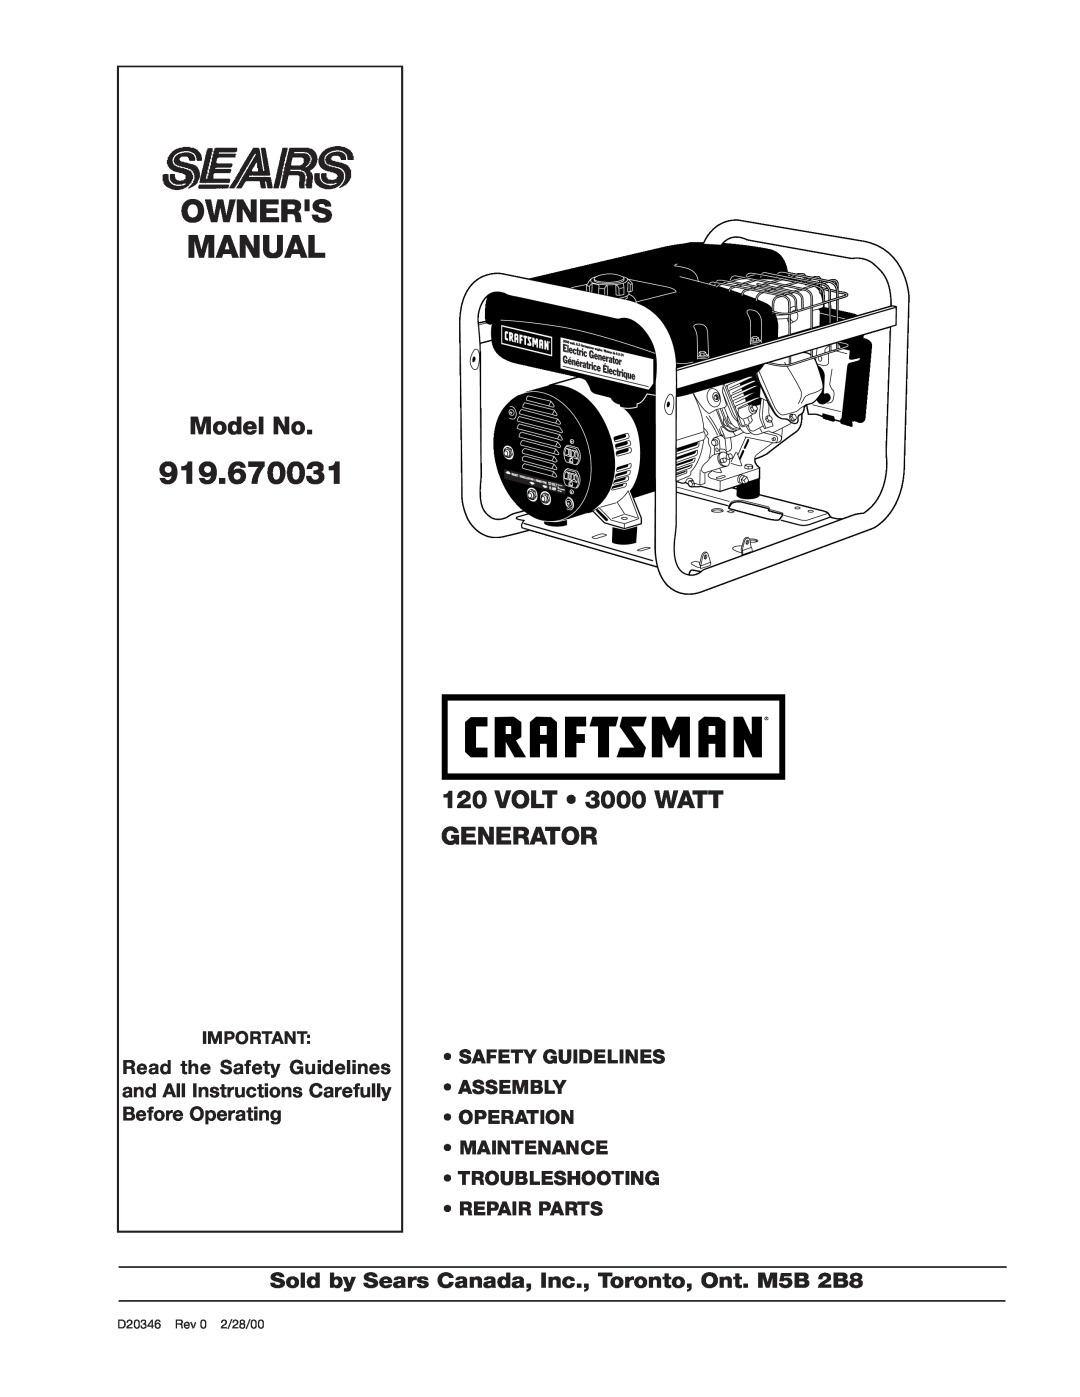 Craftsman D20346 owner manual Owners Manual, 919.670031, Model No, VOLT 3000 WATT GENERATOR, Before Operating 